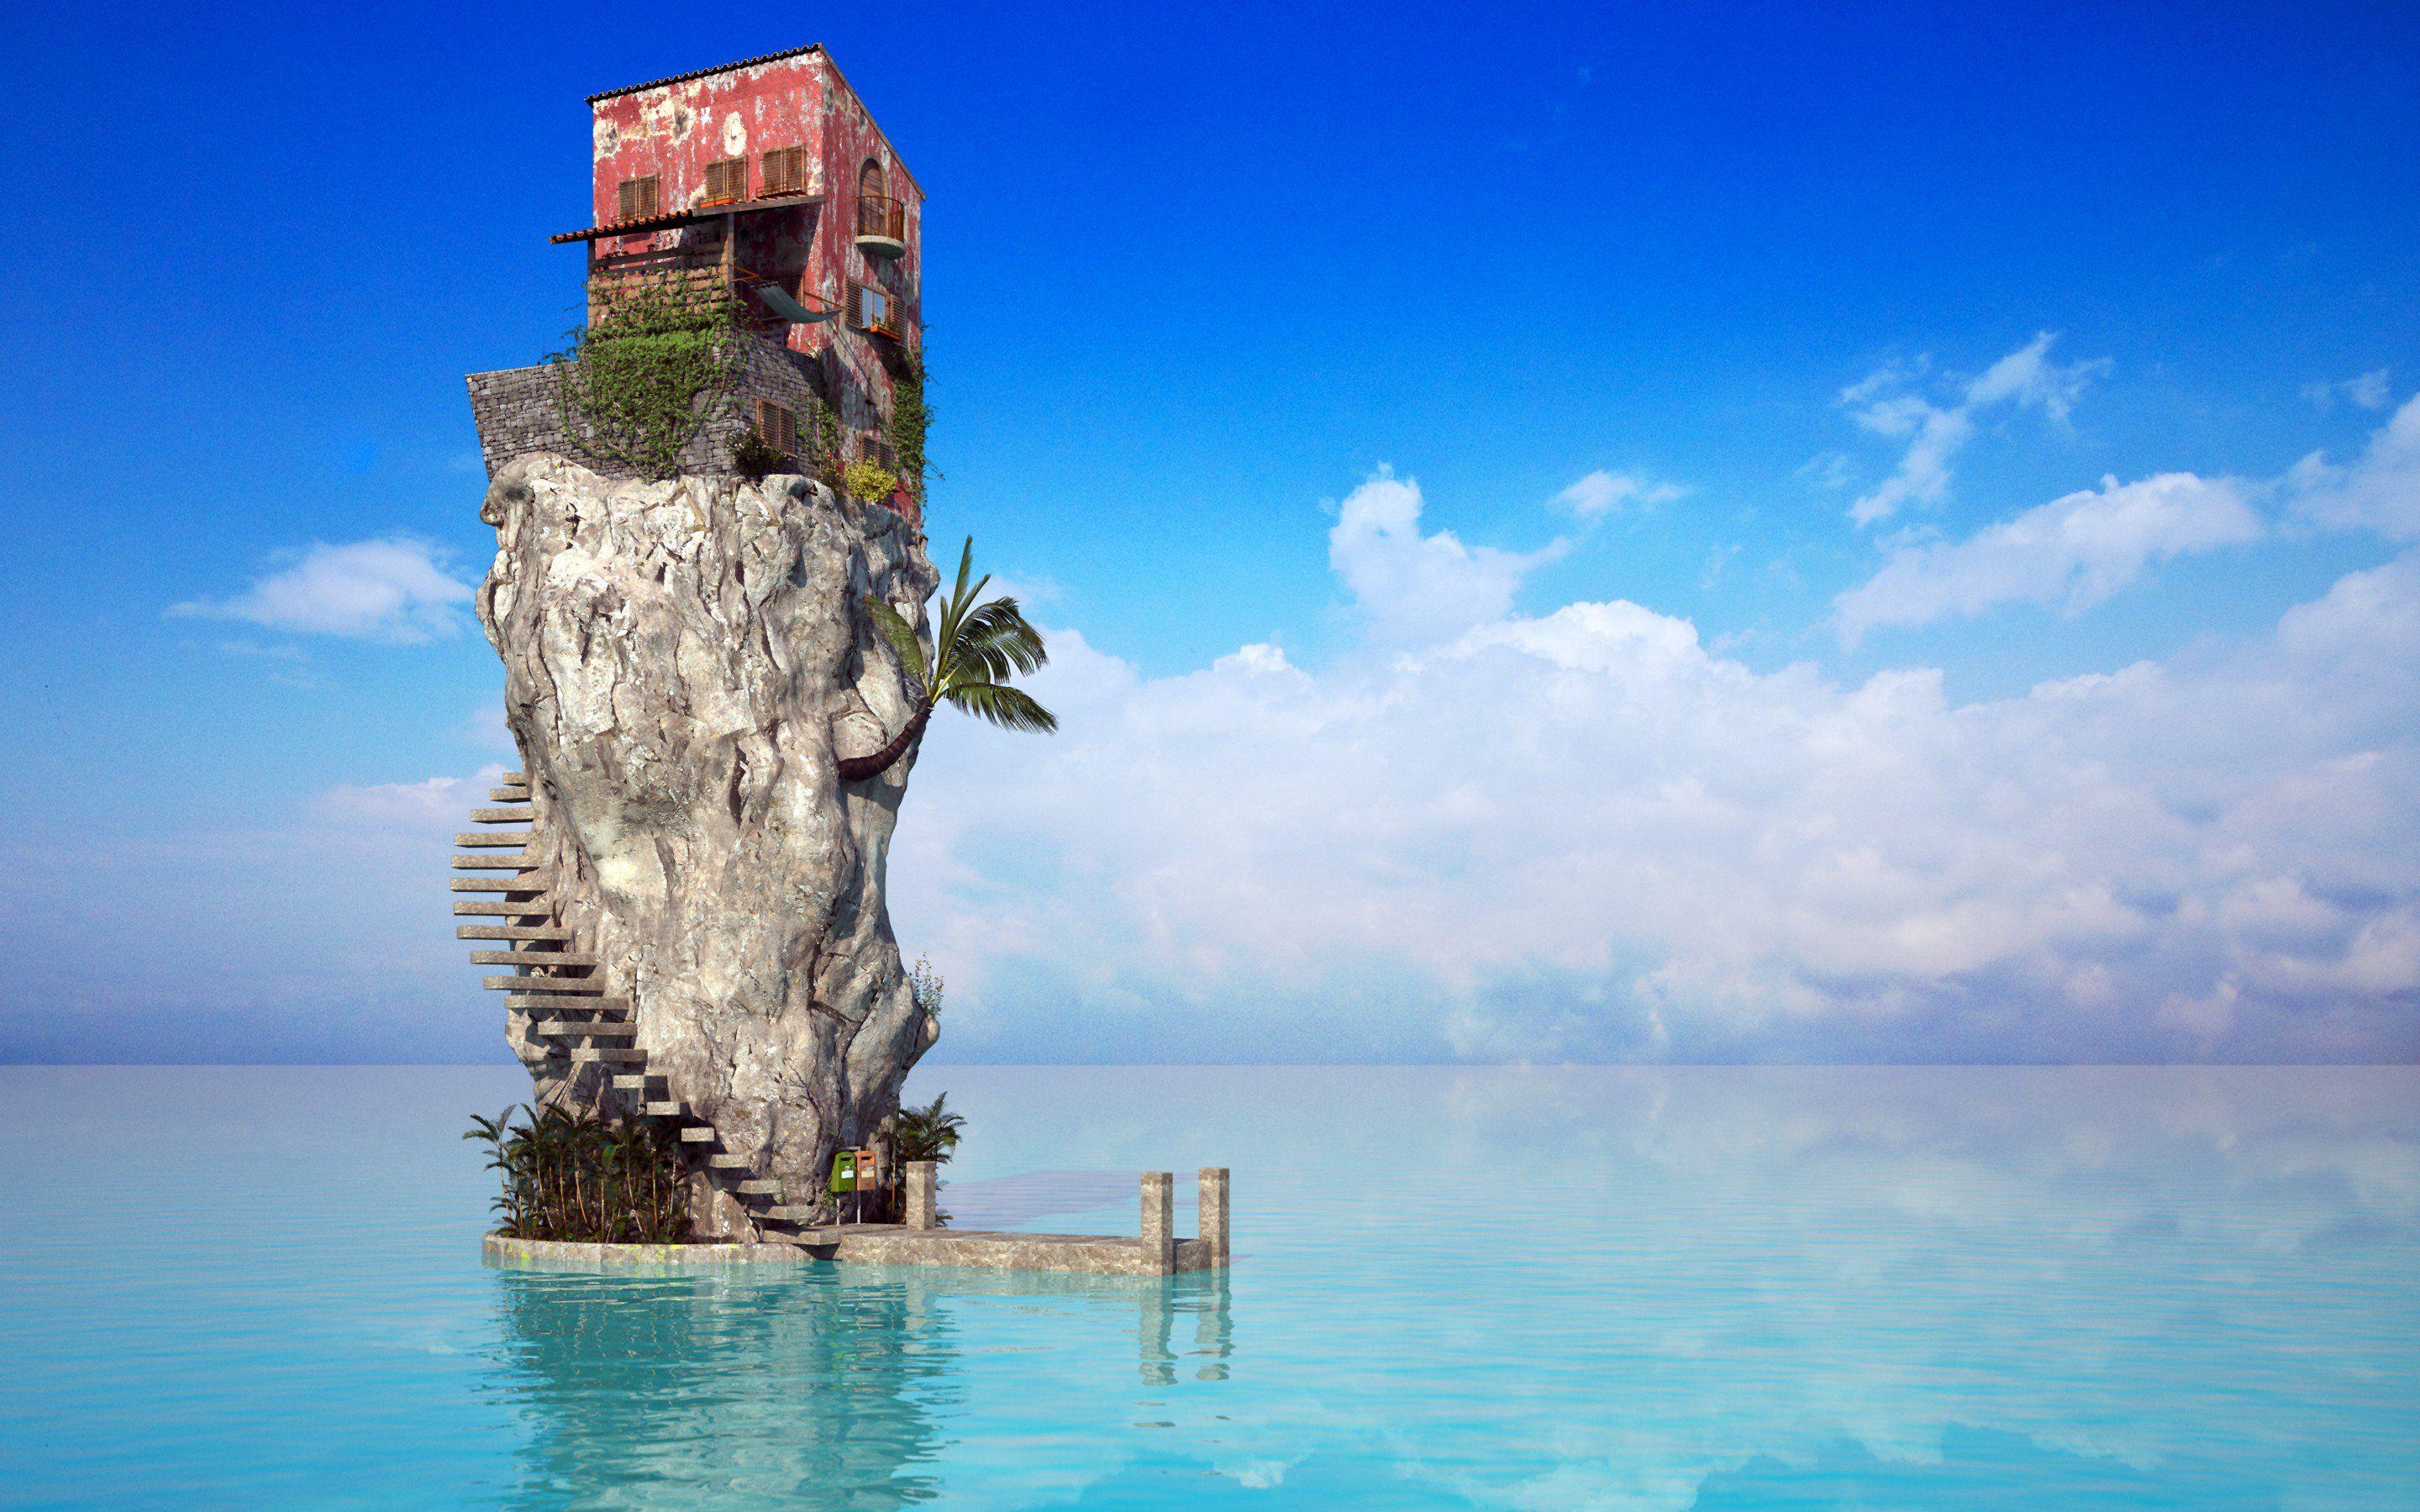 Sea House, HD Creative, 4k Wallpaper, Image, Background, Photo